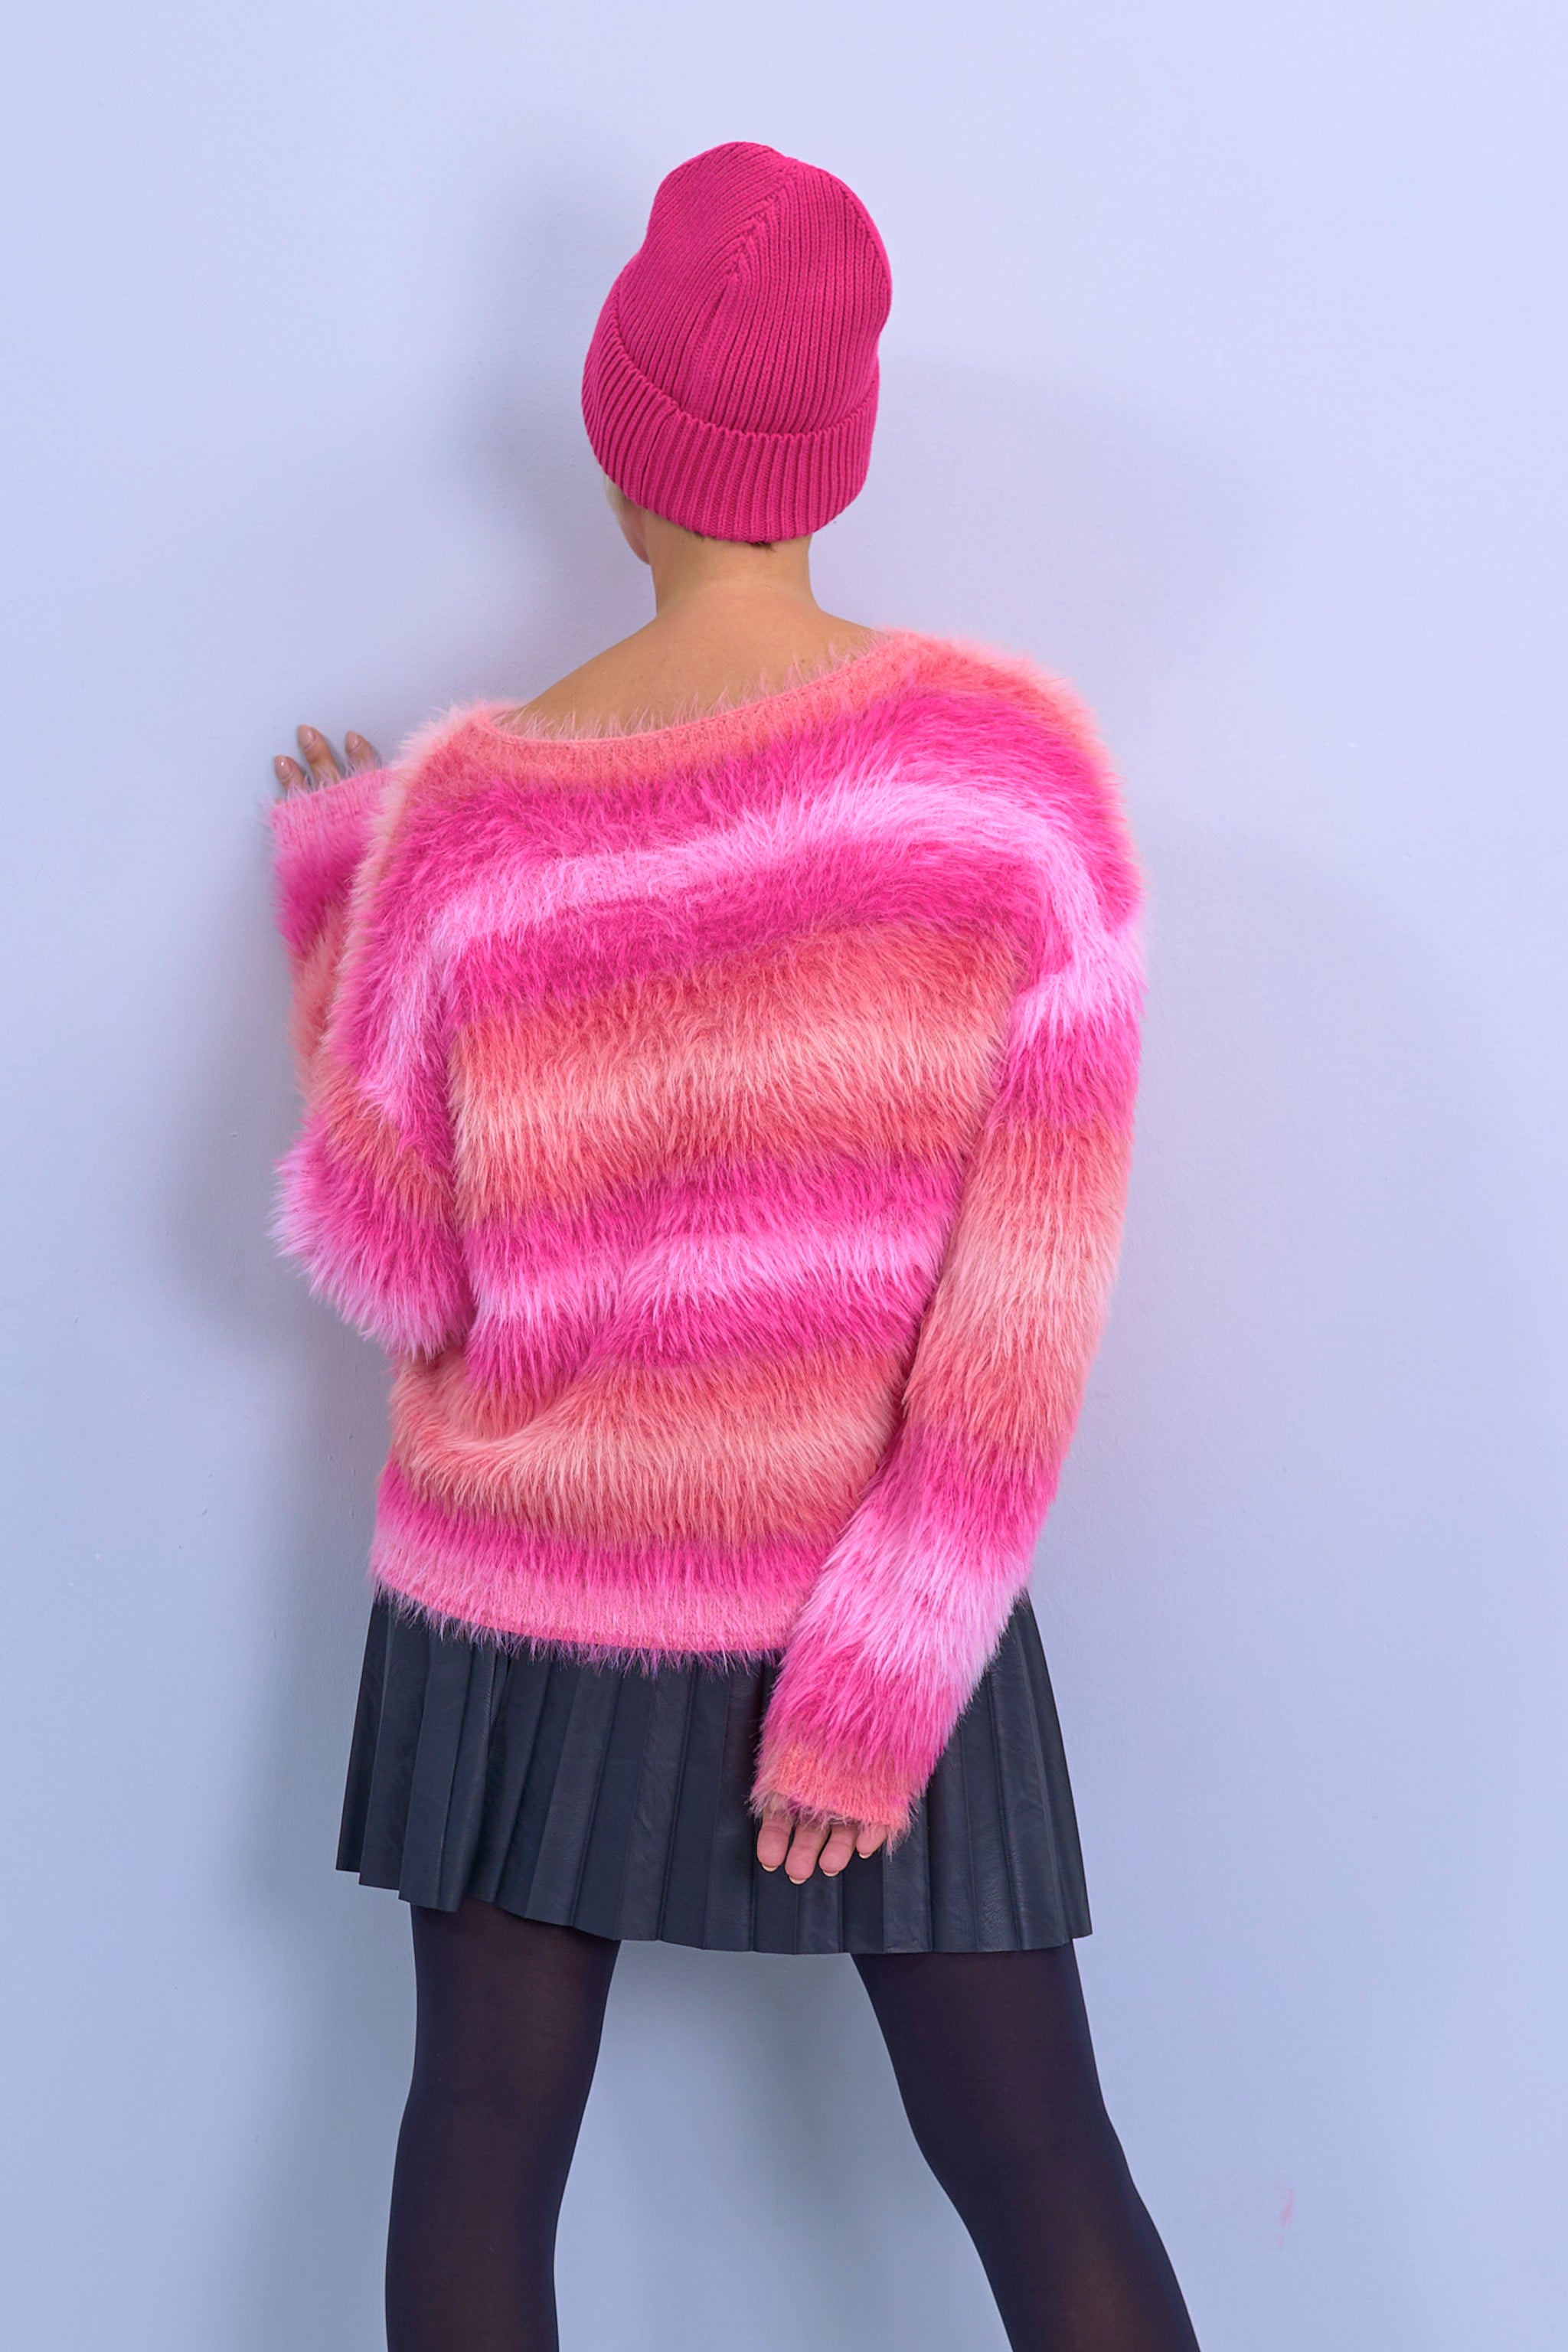 Cuddly sweater, pink-orange